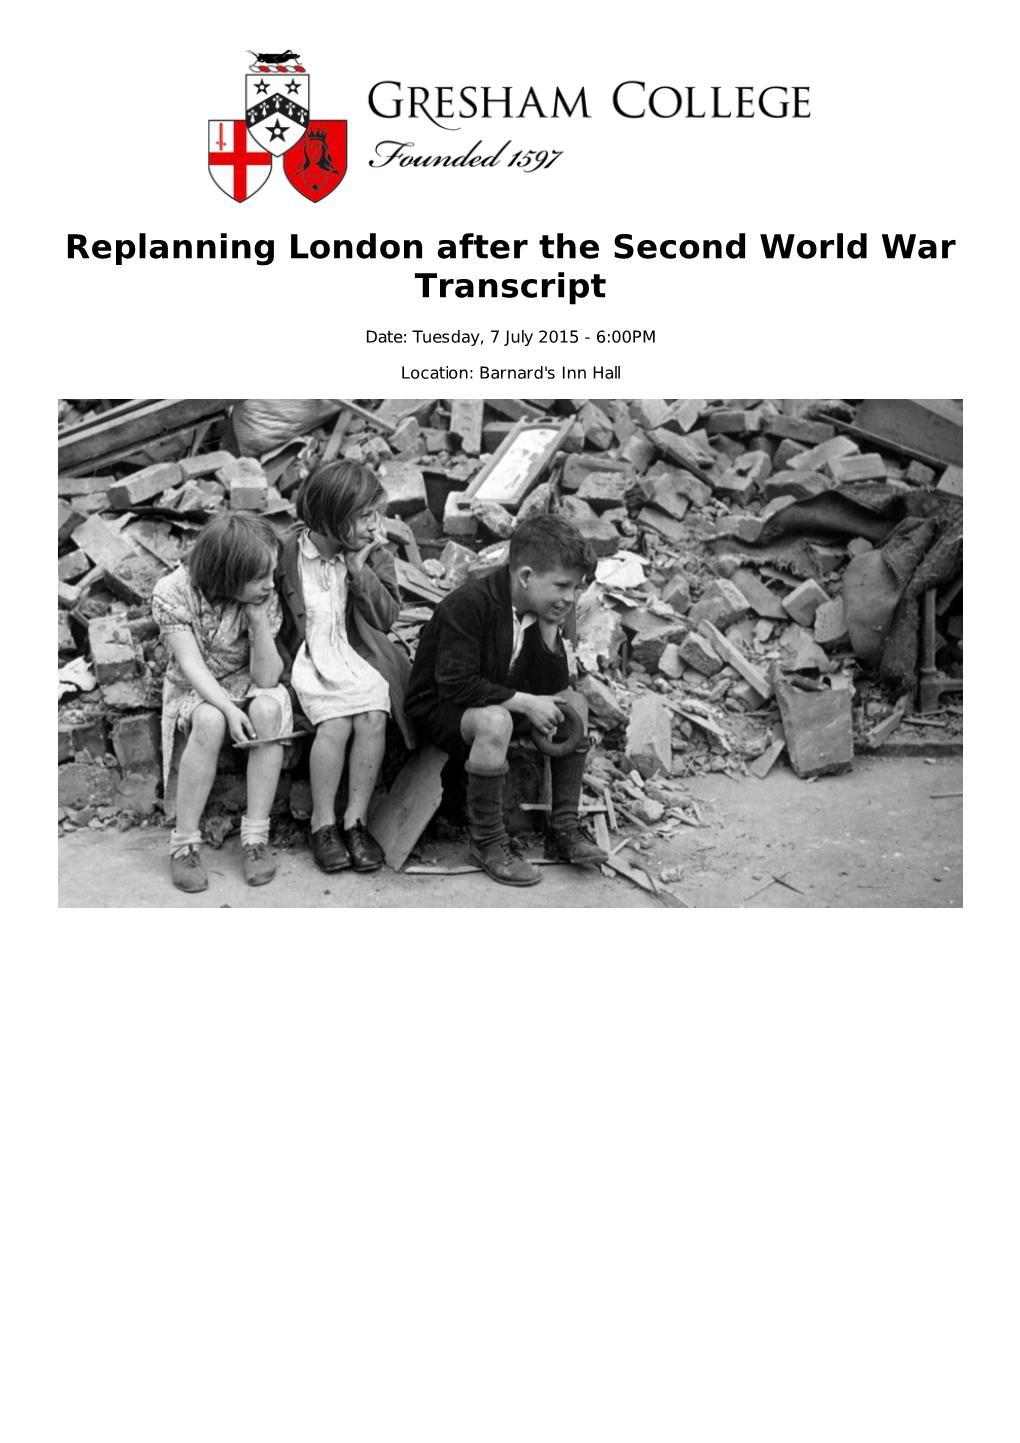 Replanning London After the Second World War Transcript